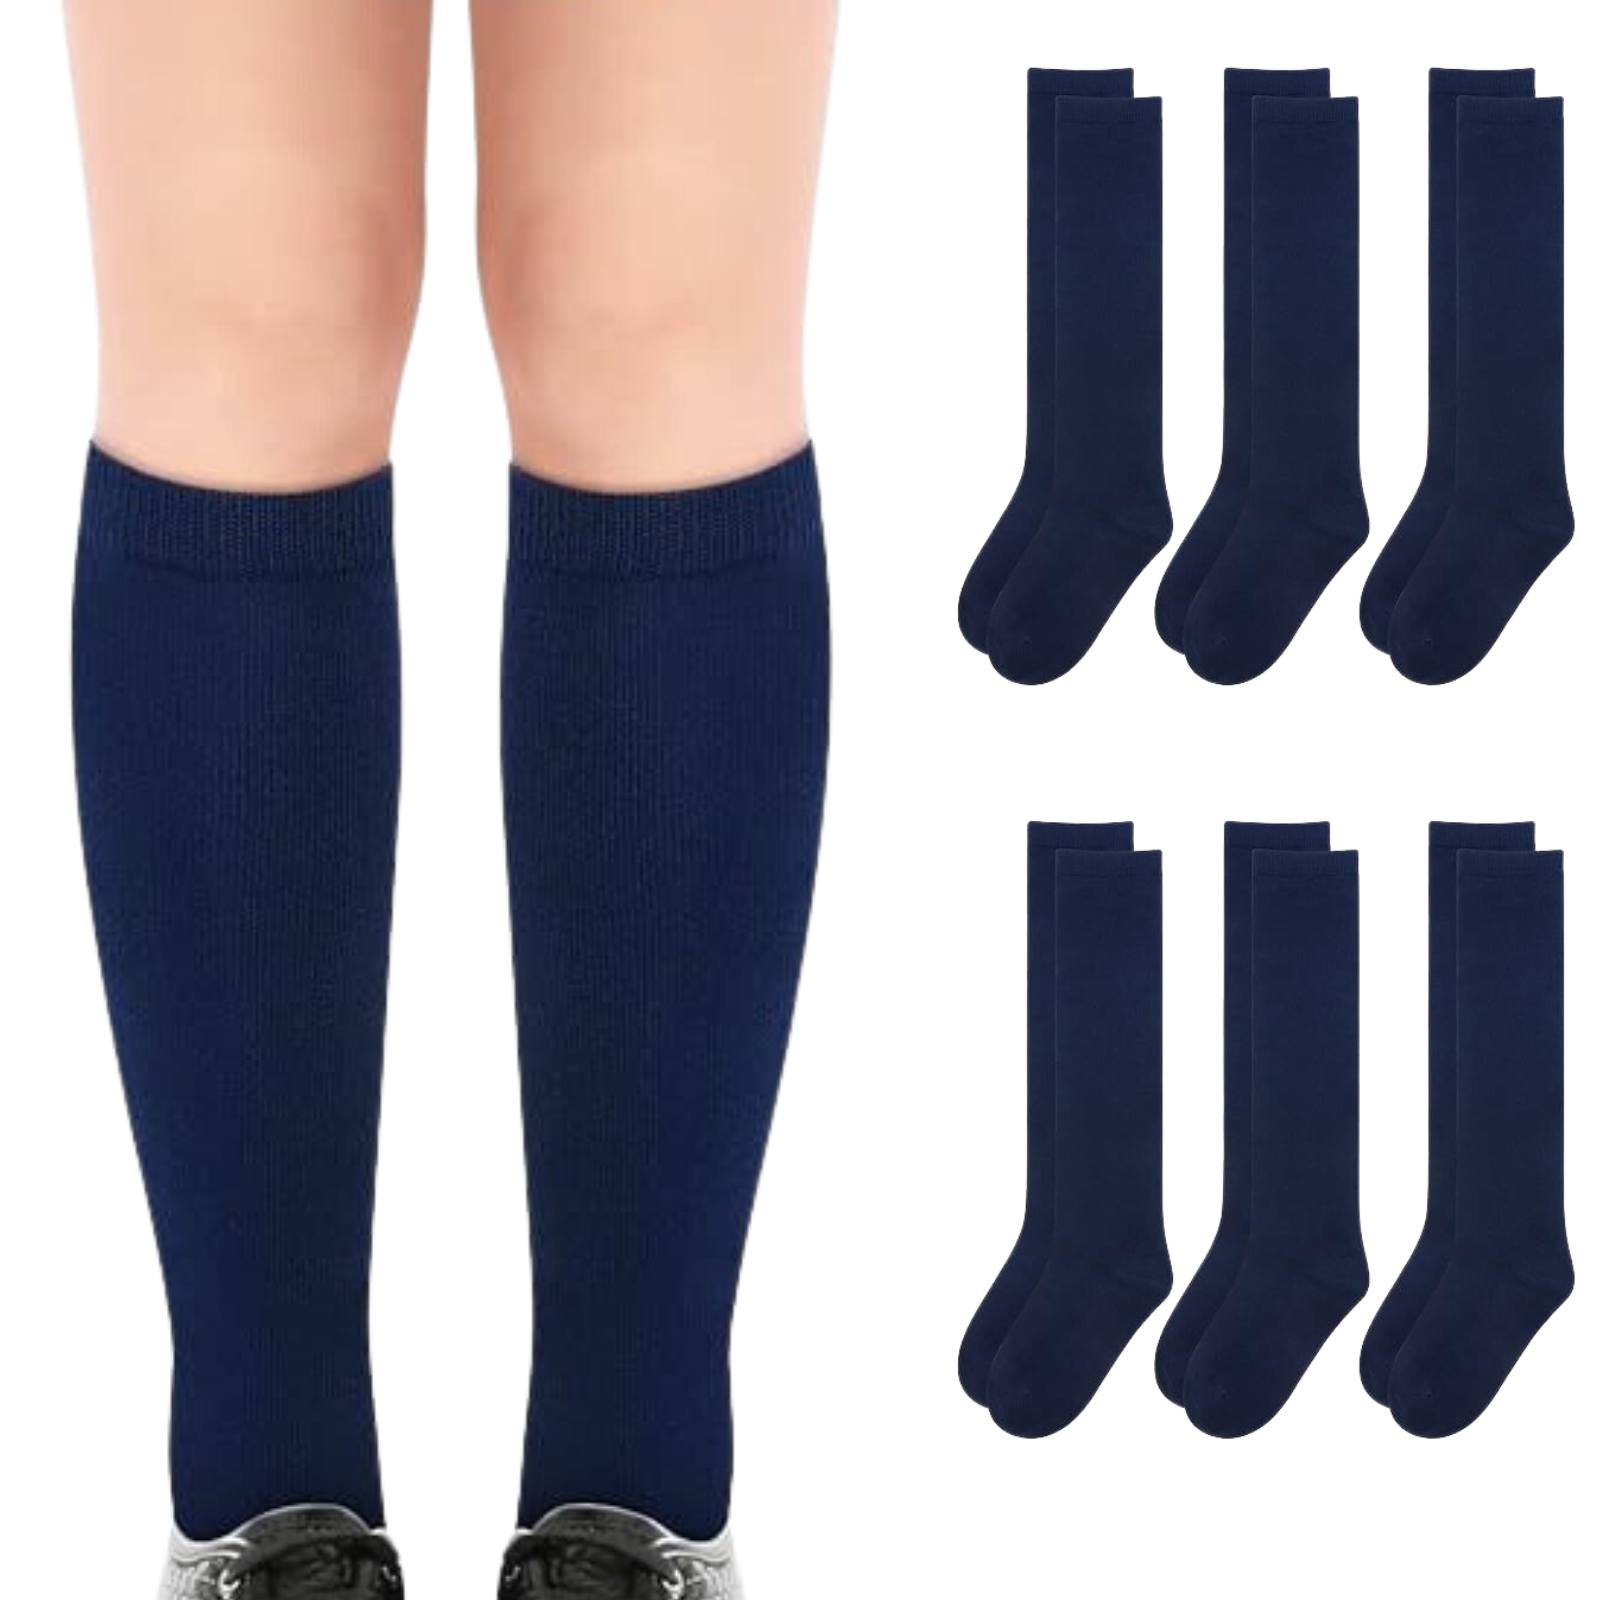 6x Pairs School Uniform Knee High Socks Cotton Rich Girls Boys Kids Bulk - Navy - 2-8 (10-12 Years Old)